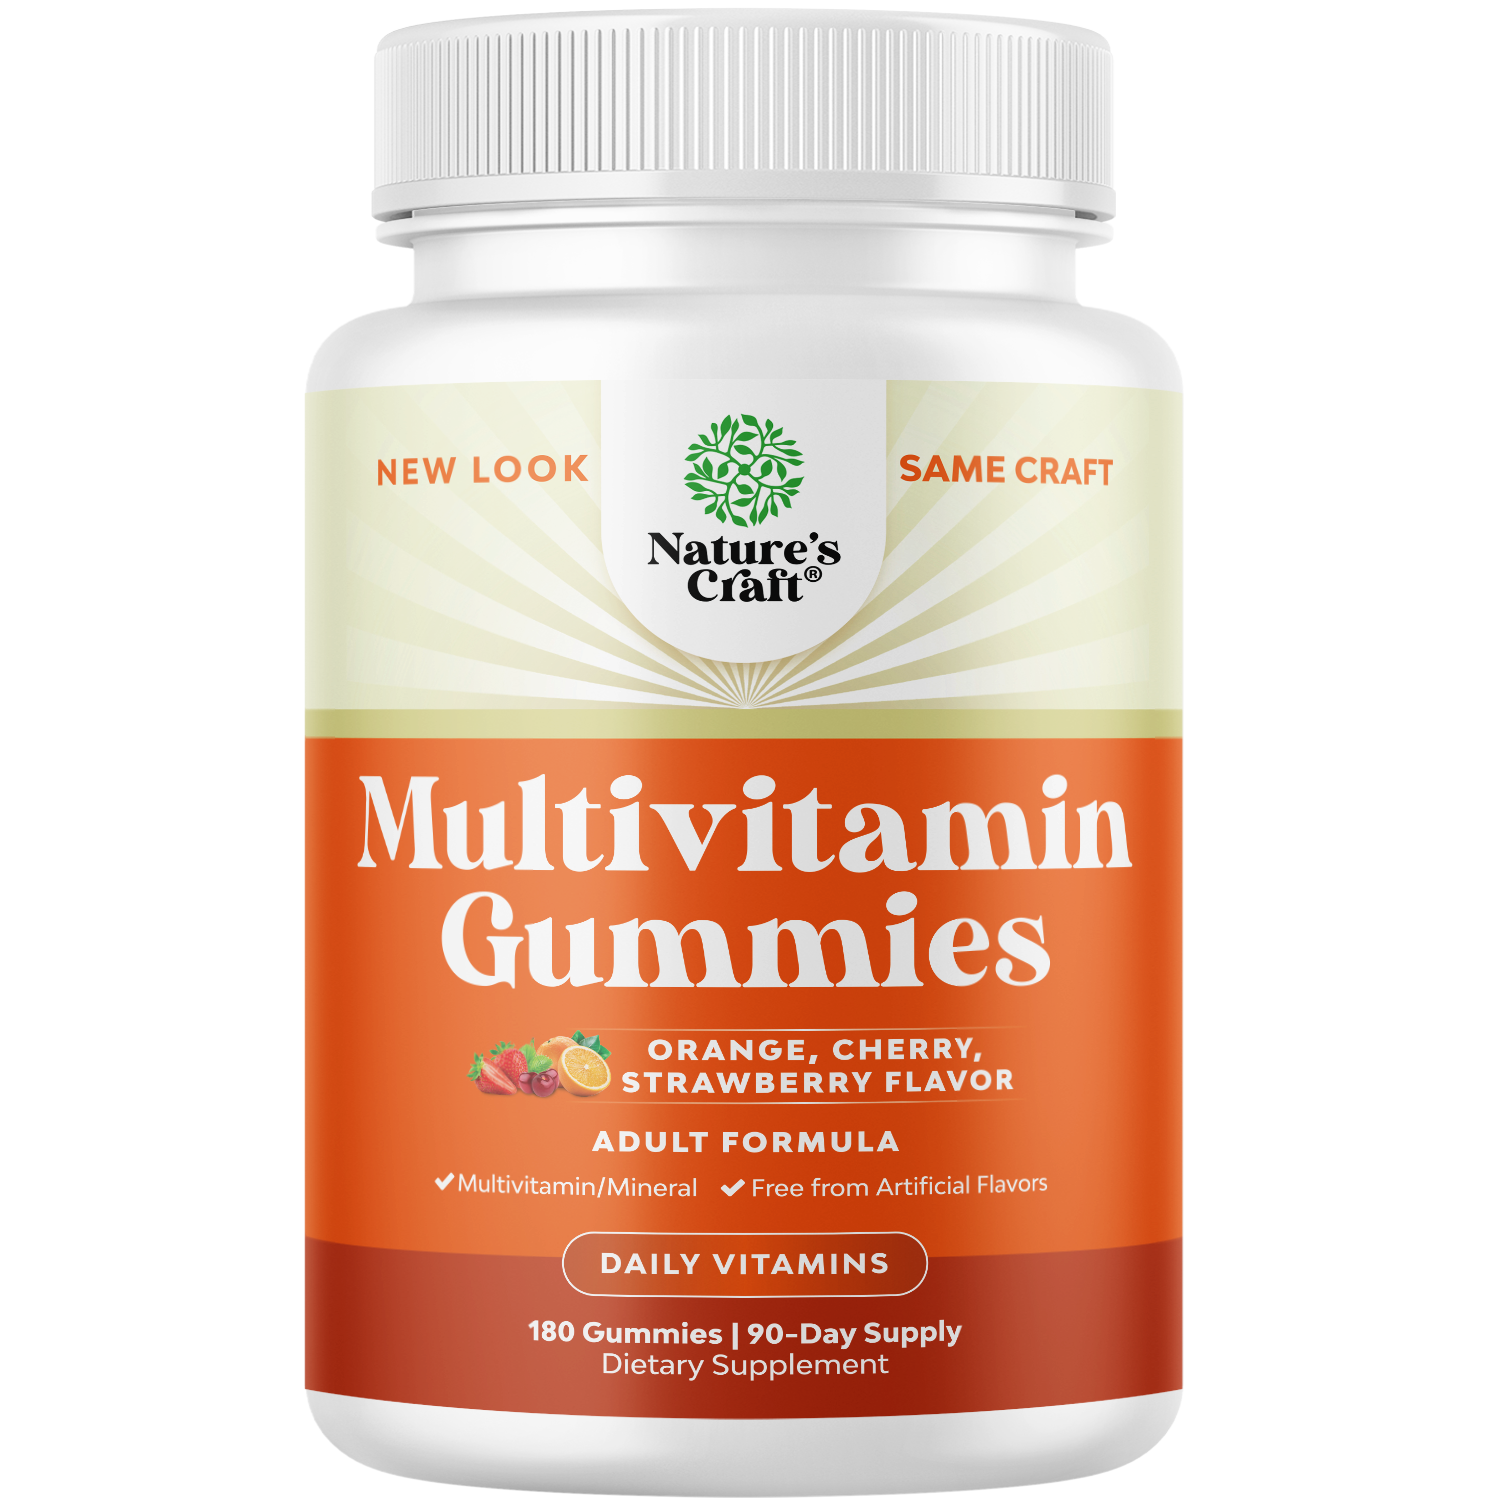 Multivitamin Gummies - 180 Gummies